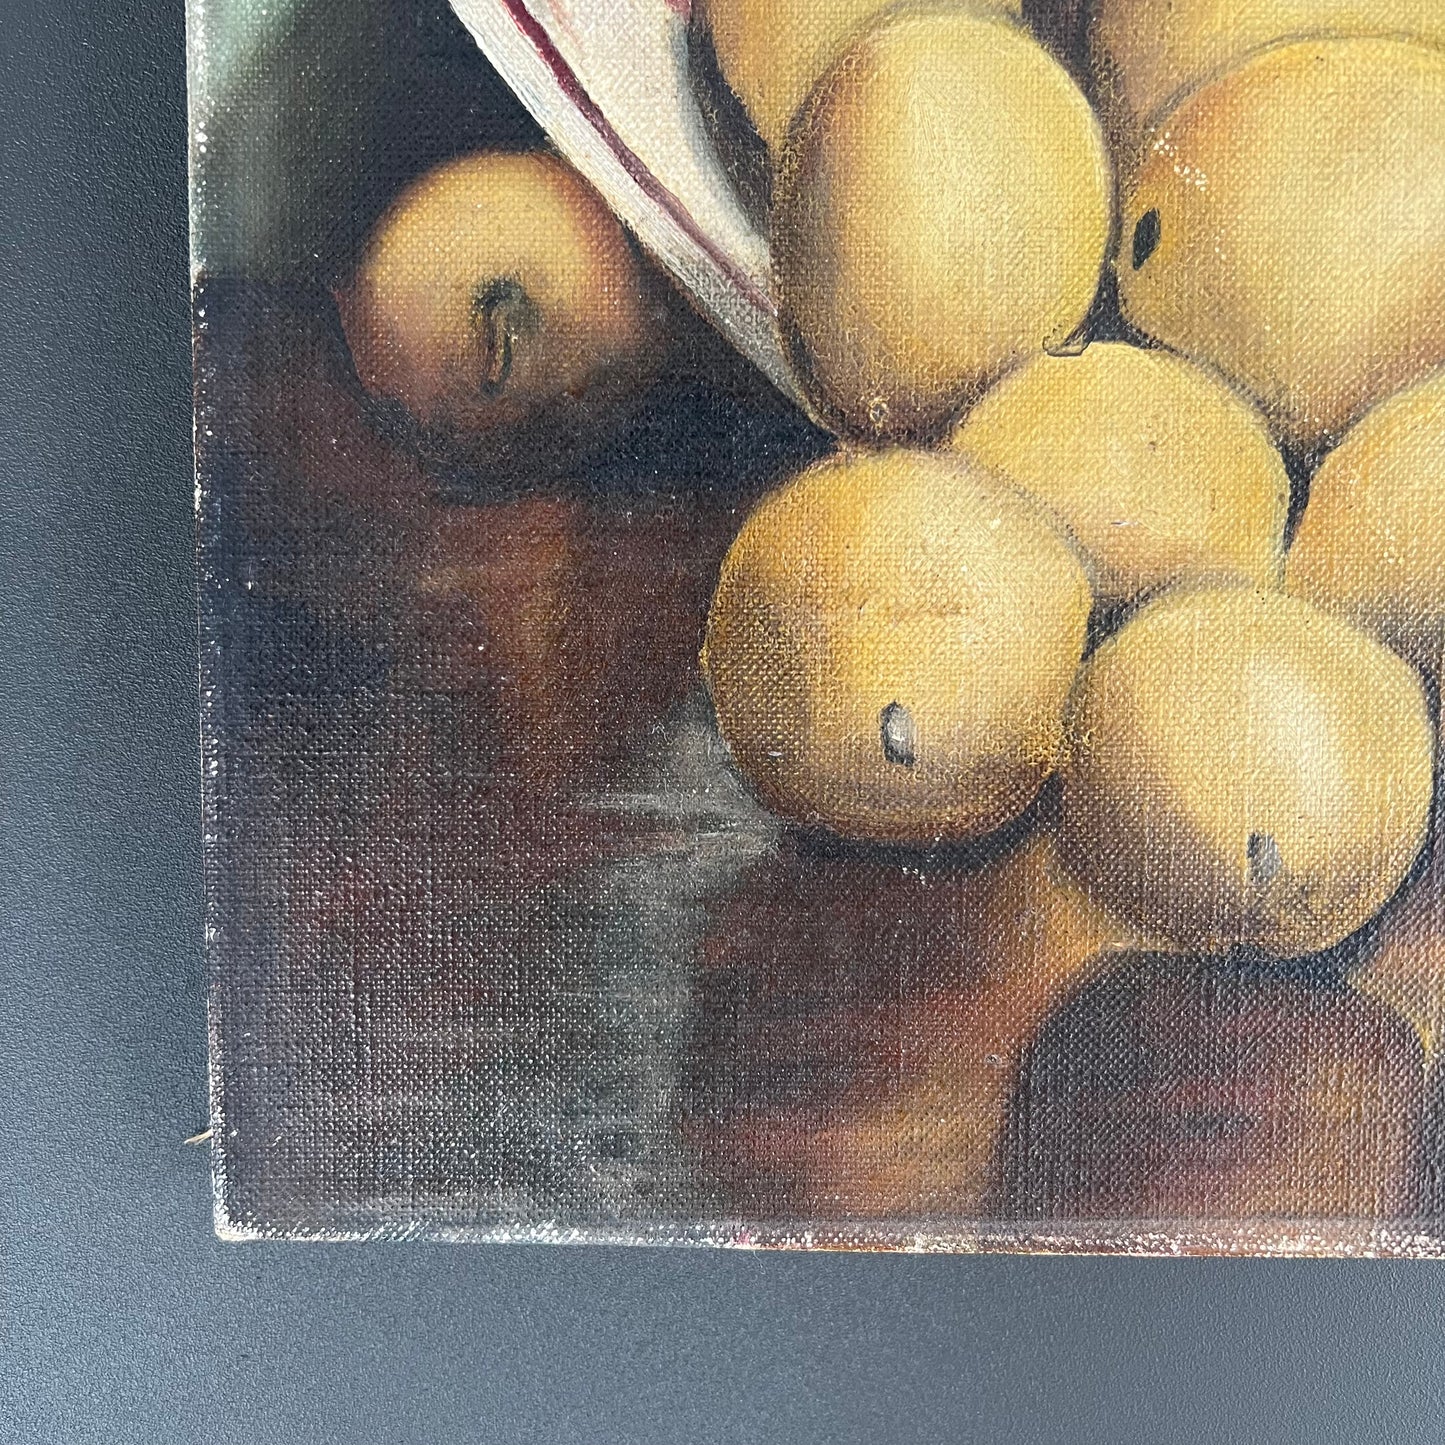 Vintage Oil Painting French Still Life Lemons, Tulips & Stripes c1930s